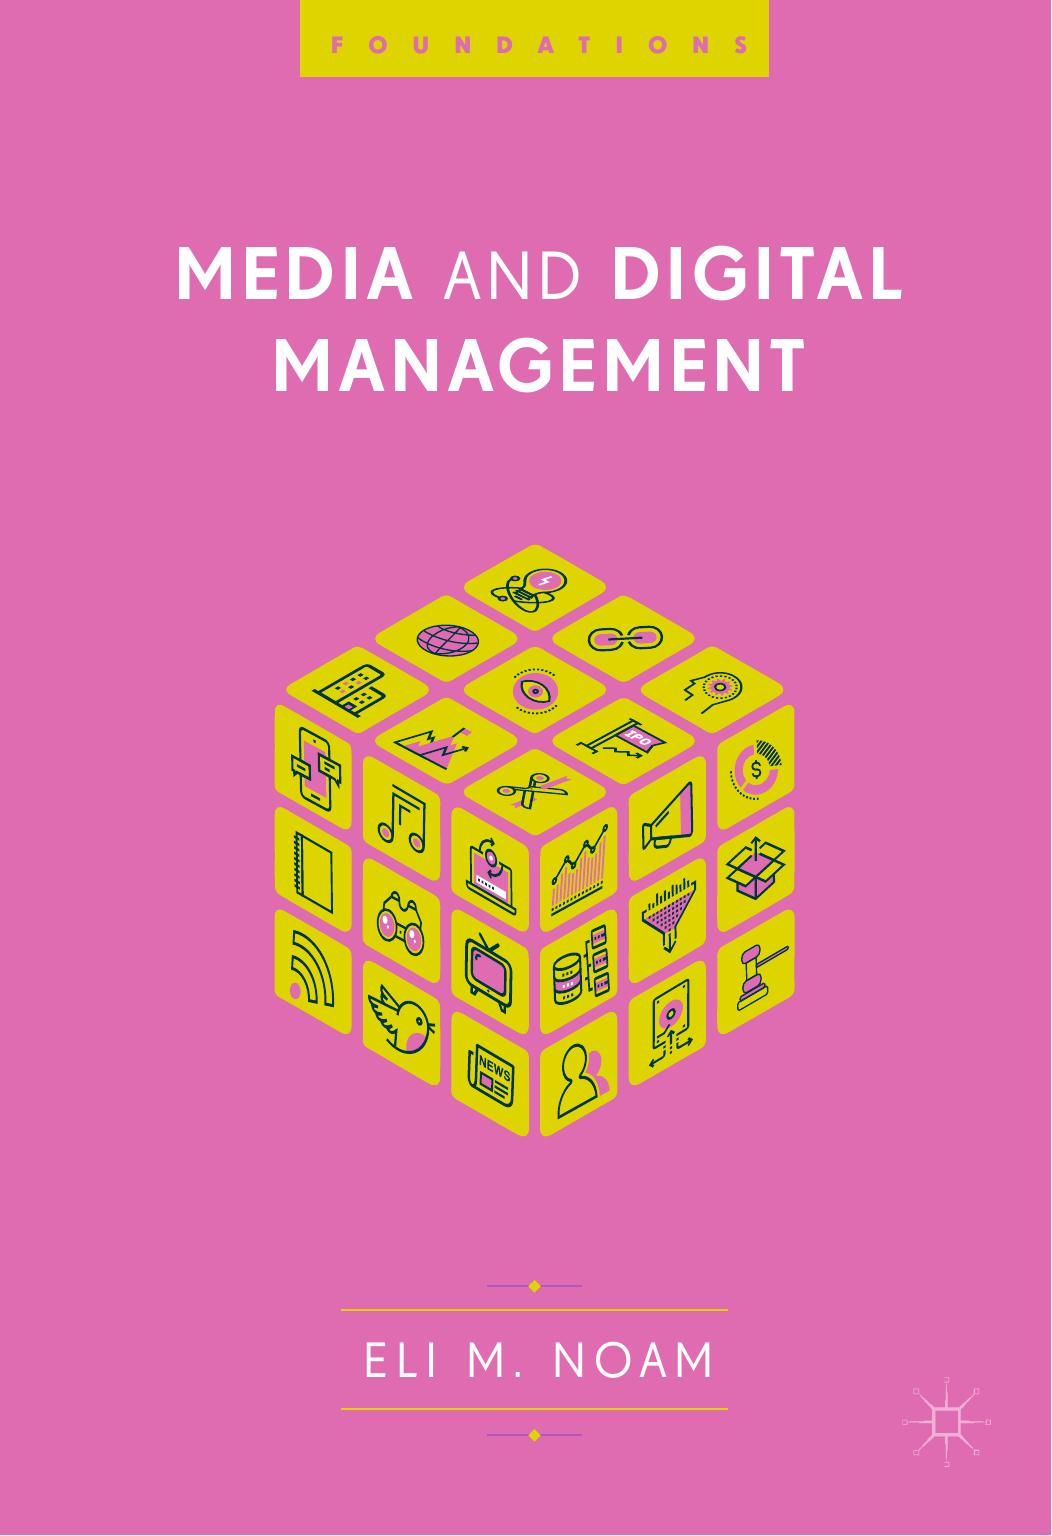 Media and Digital Management by Eli M. Noam